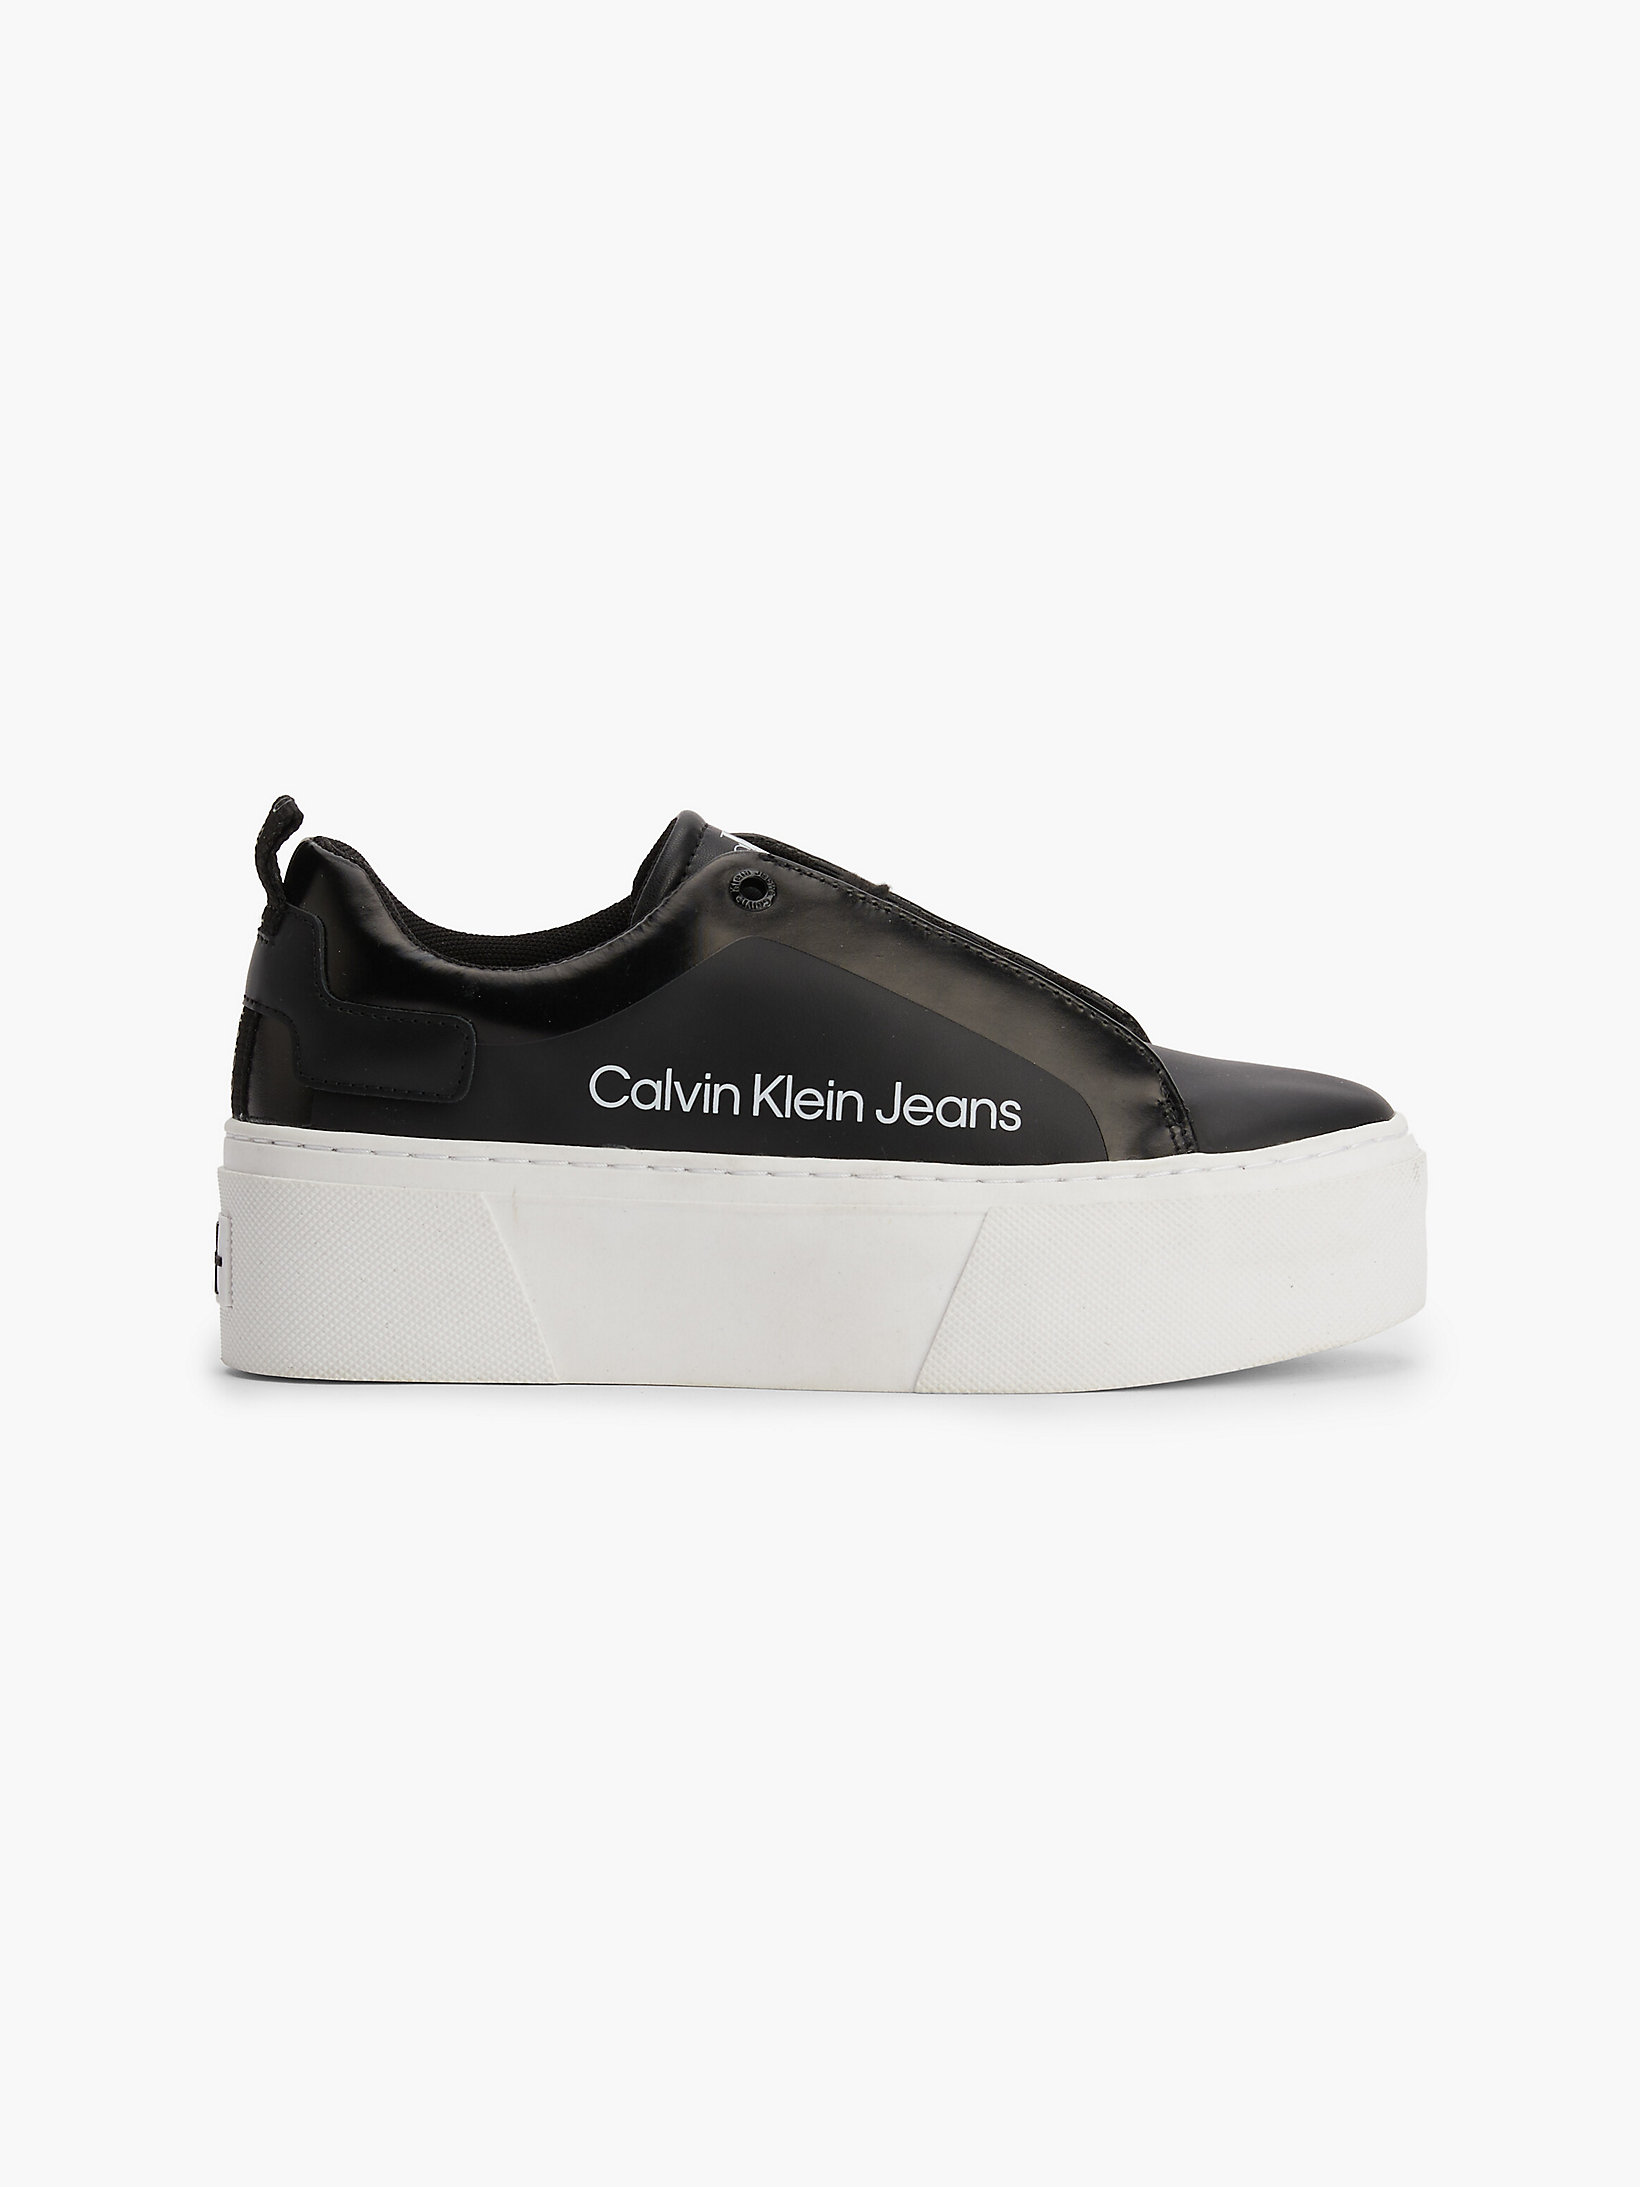 Sneaker Con Plateau In Pelle > Black > undefined donna > Calvin Klein